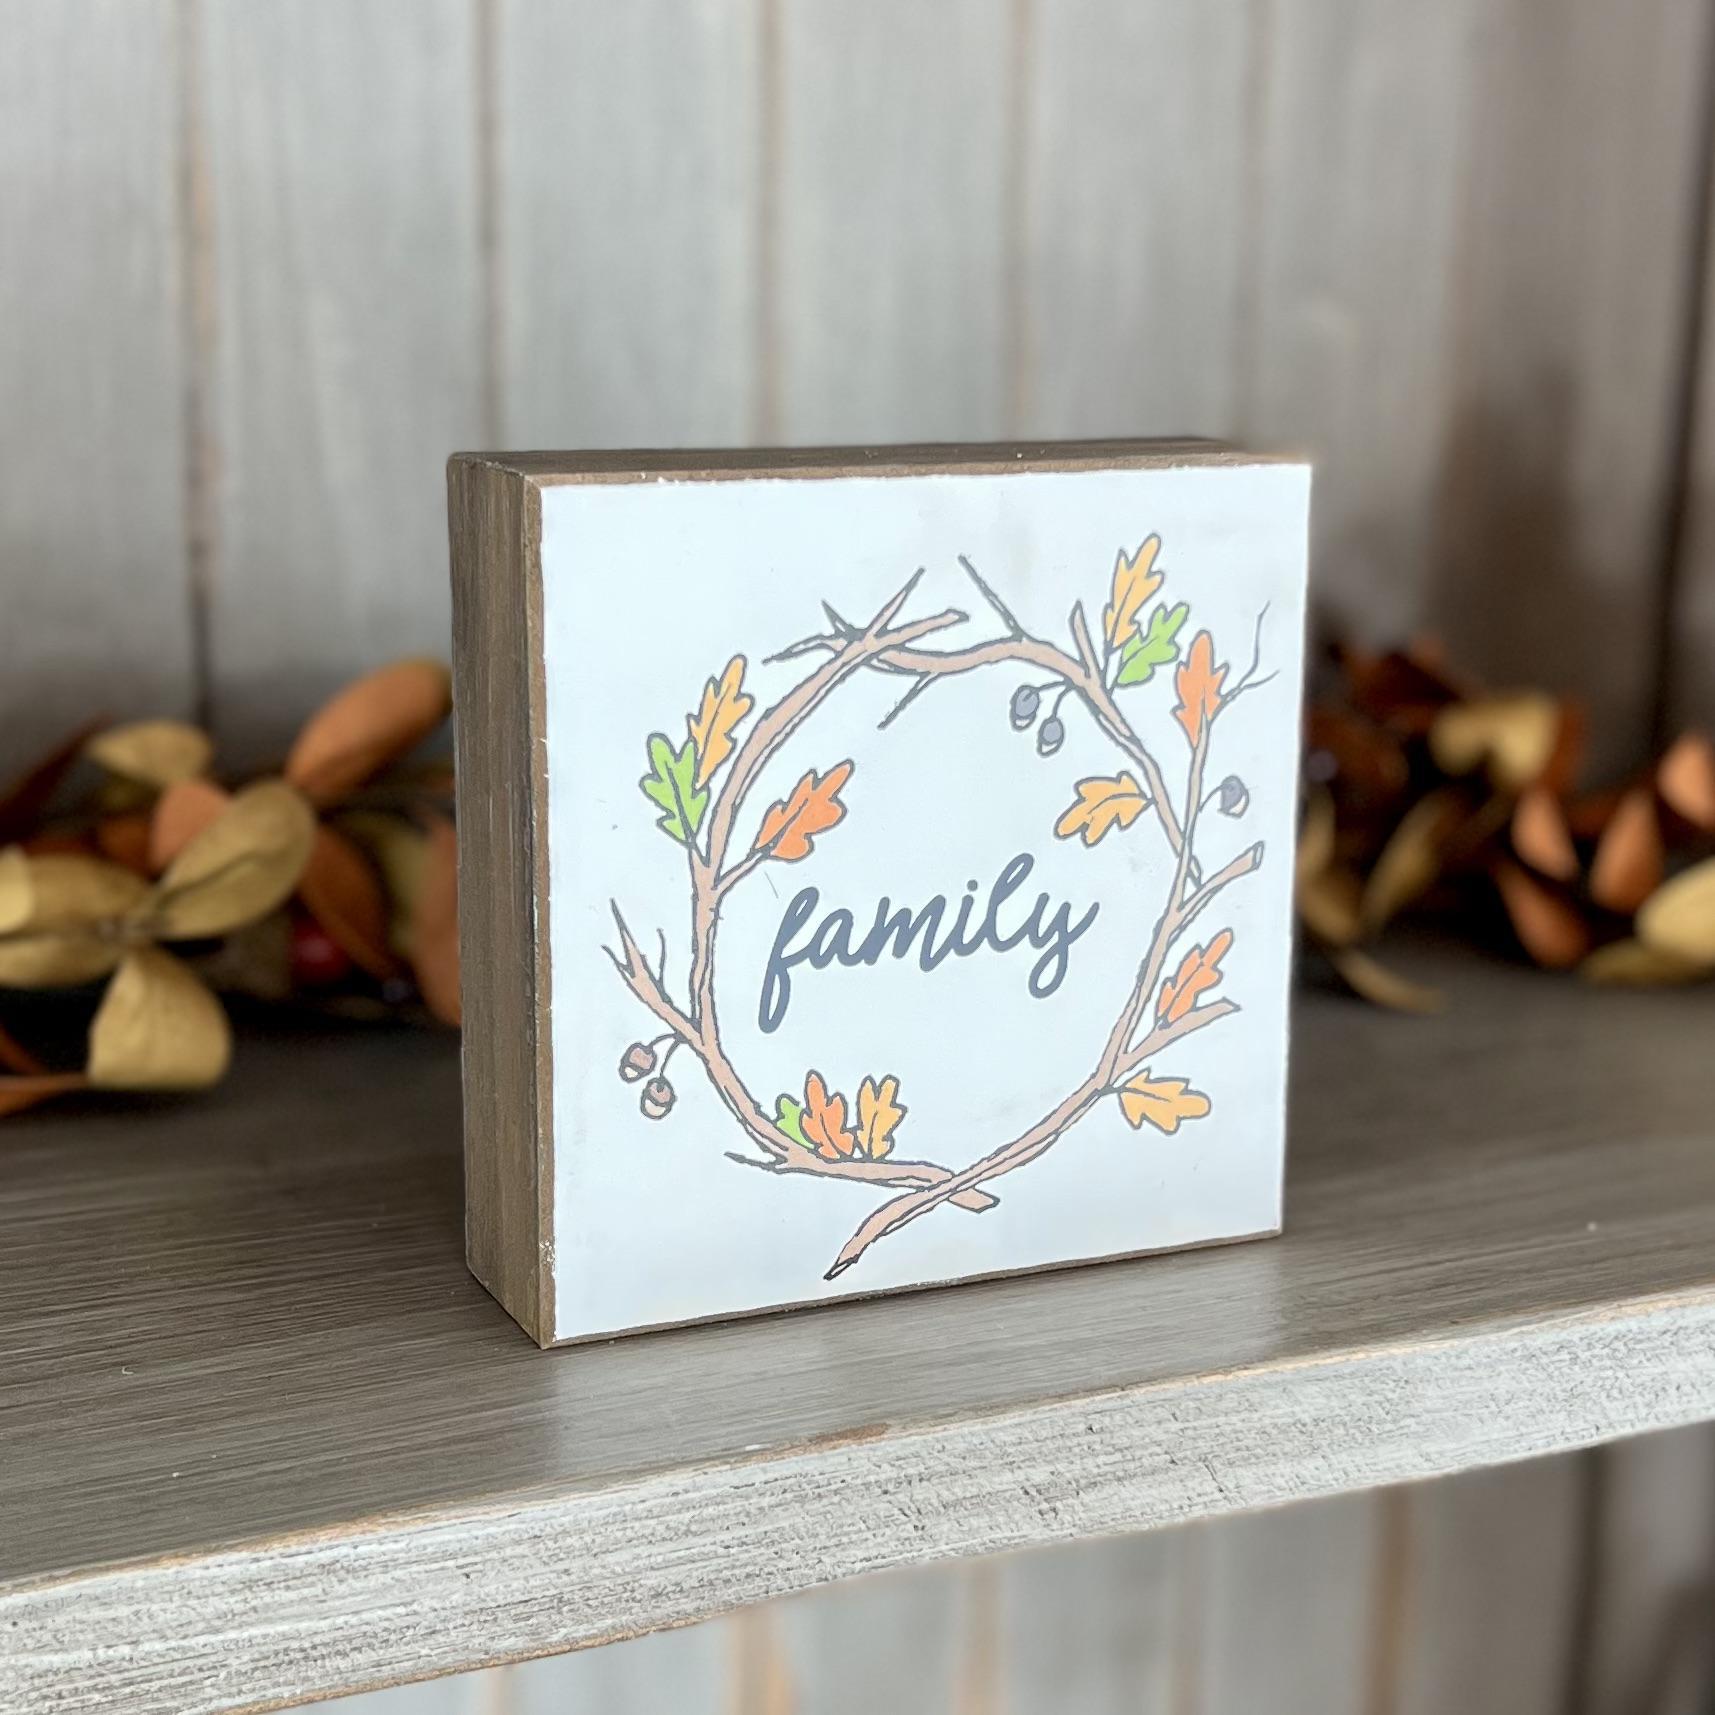 Family Wreath Box Sign - 5"Sq